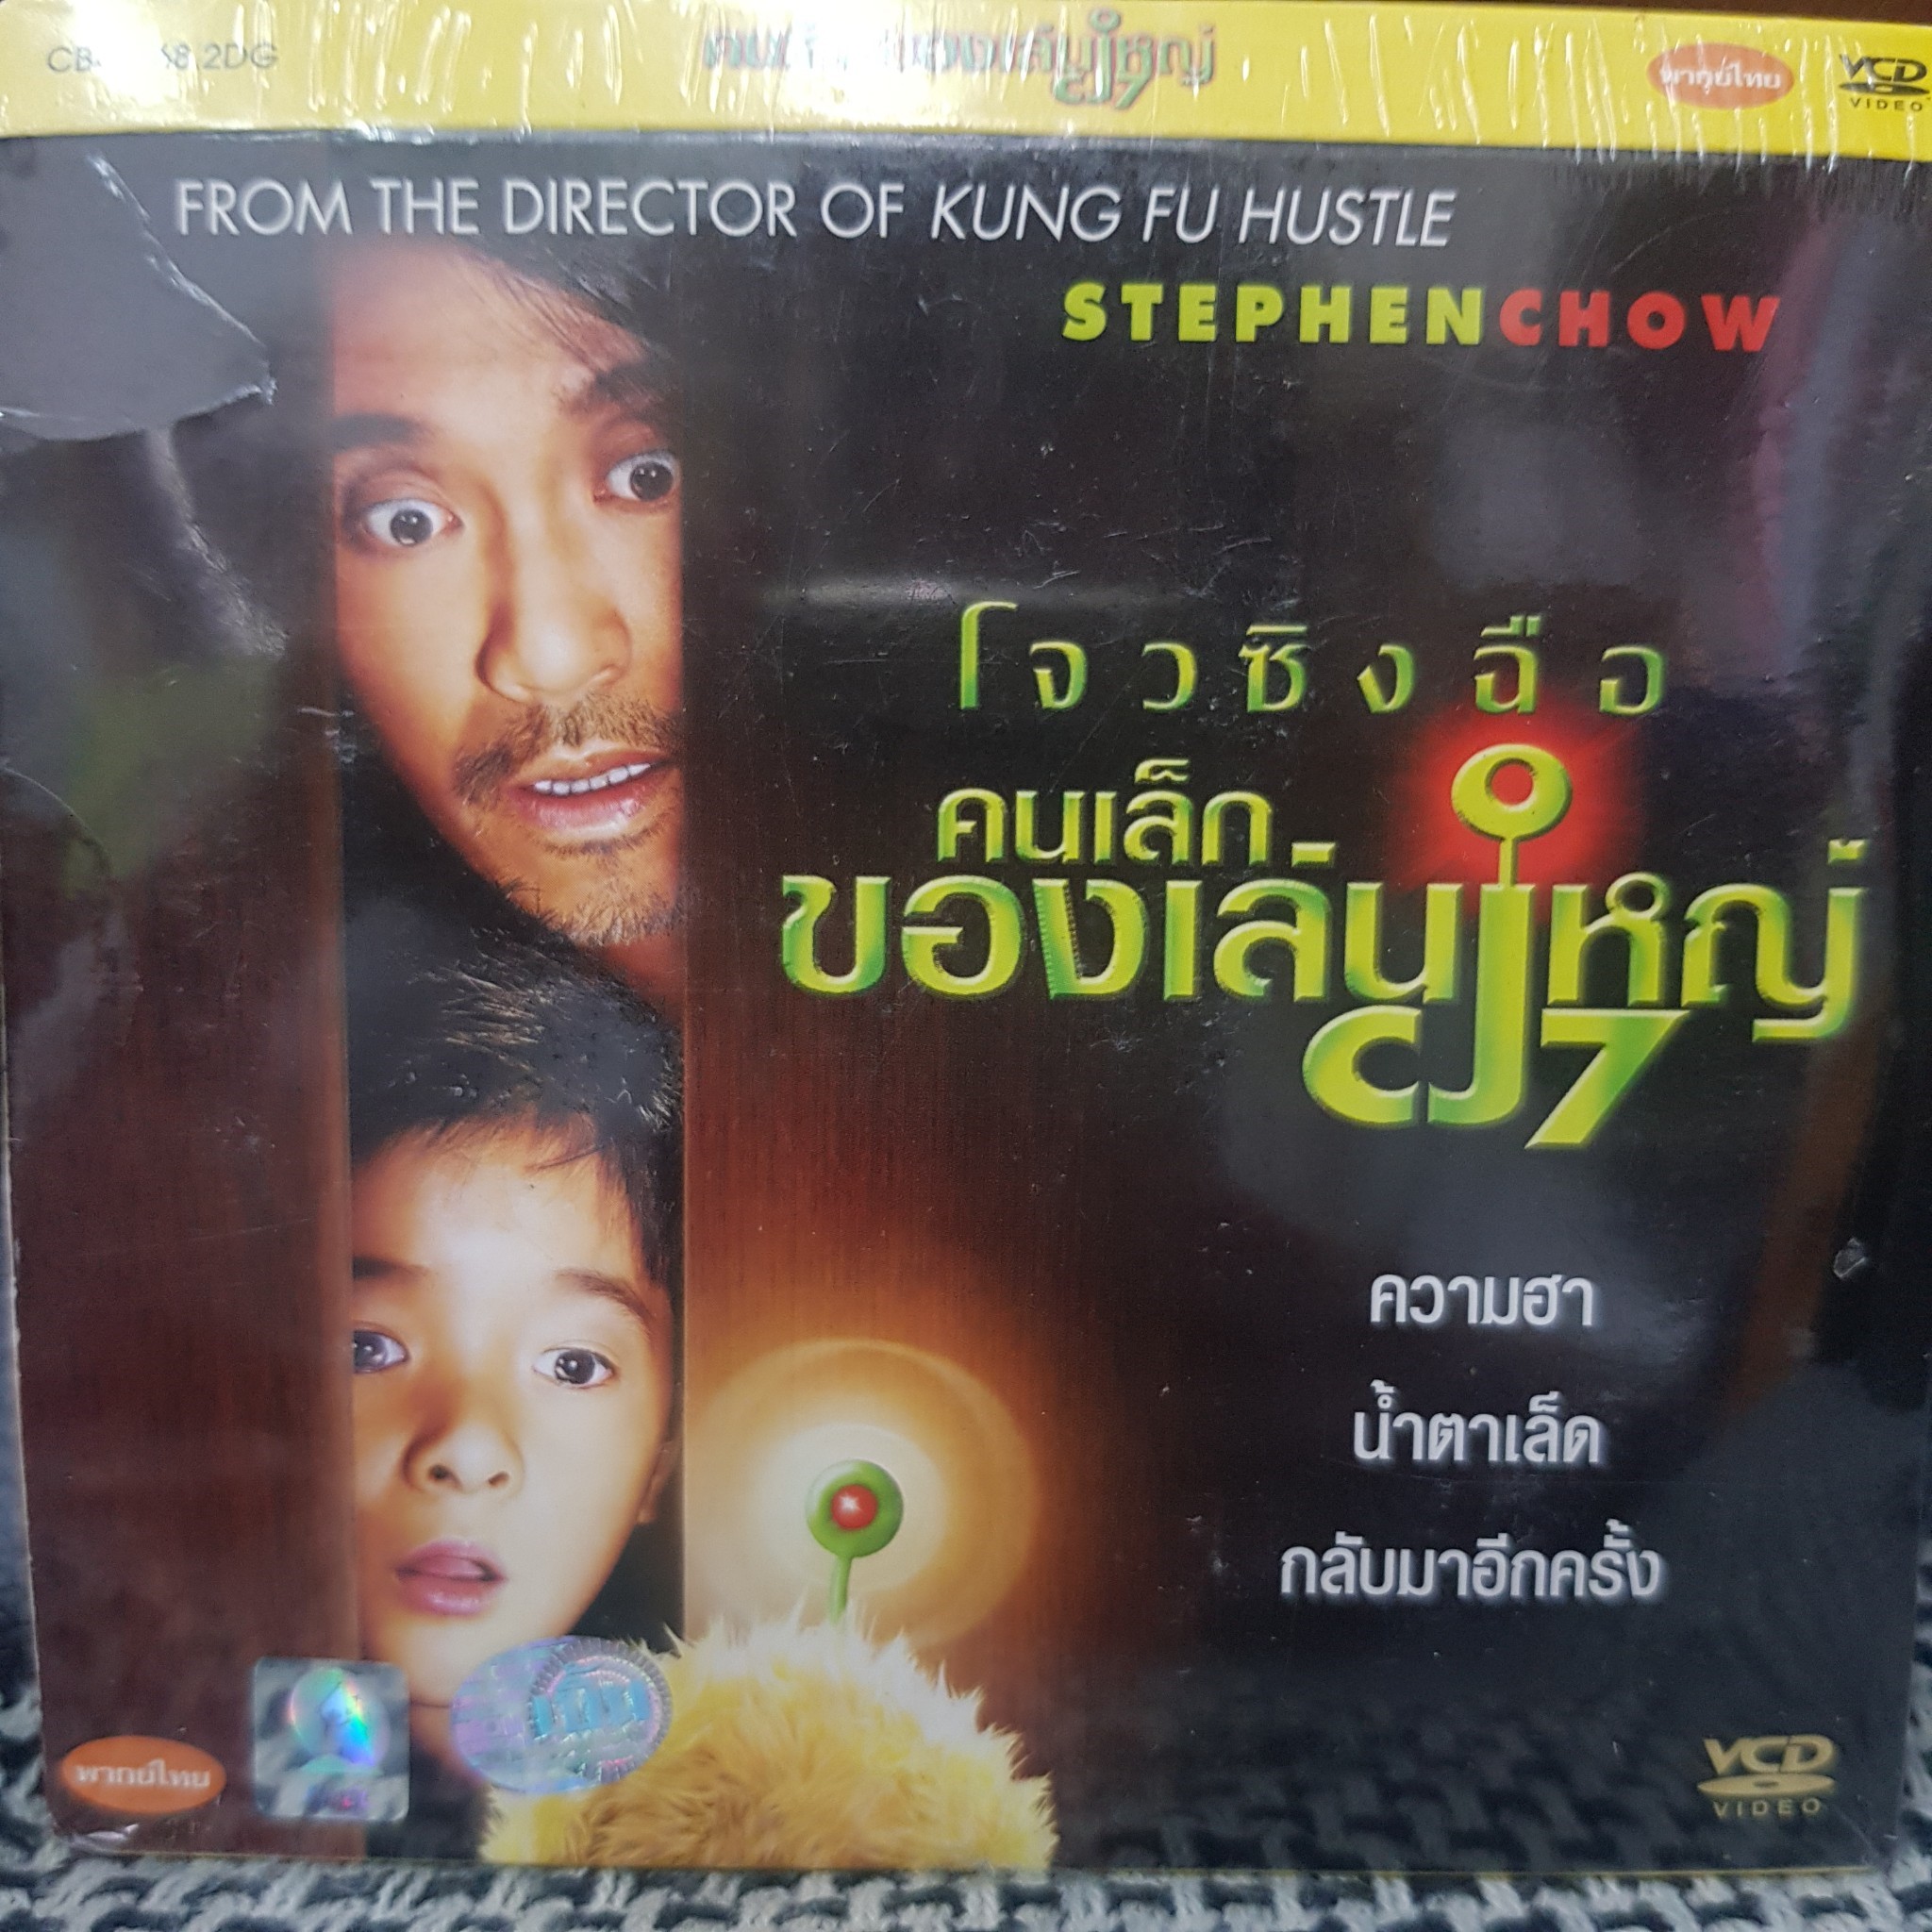 VCDหนัง คนเล็ก ของเล่นใหญ่ โจวซิงฉือ พากย์ไทย (SBYVCD2020-คนเล็กของเล่นใหญ่) ตลก คอมมาดี้ comedy แผ่นหนัง สะสม หนังโรงภาพยนตร์ ภาพยนตร์ หนังไทยเก่า หนัง งาน2020 cinema vcd วีซีดี STARMART